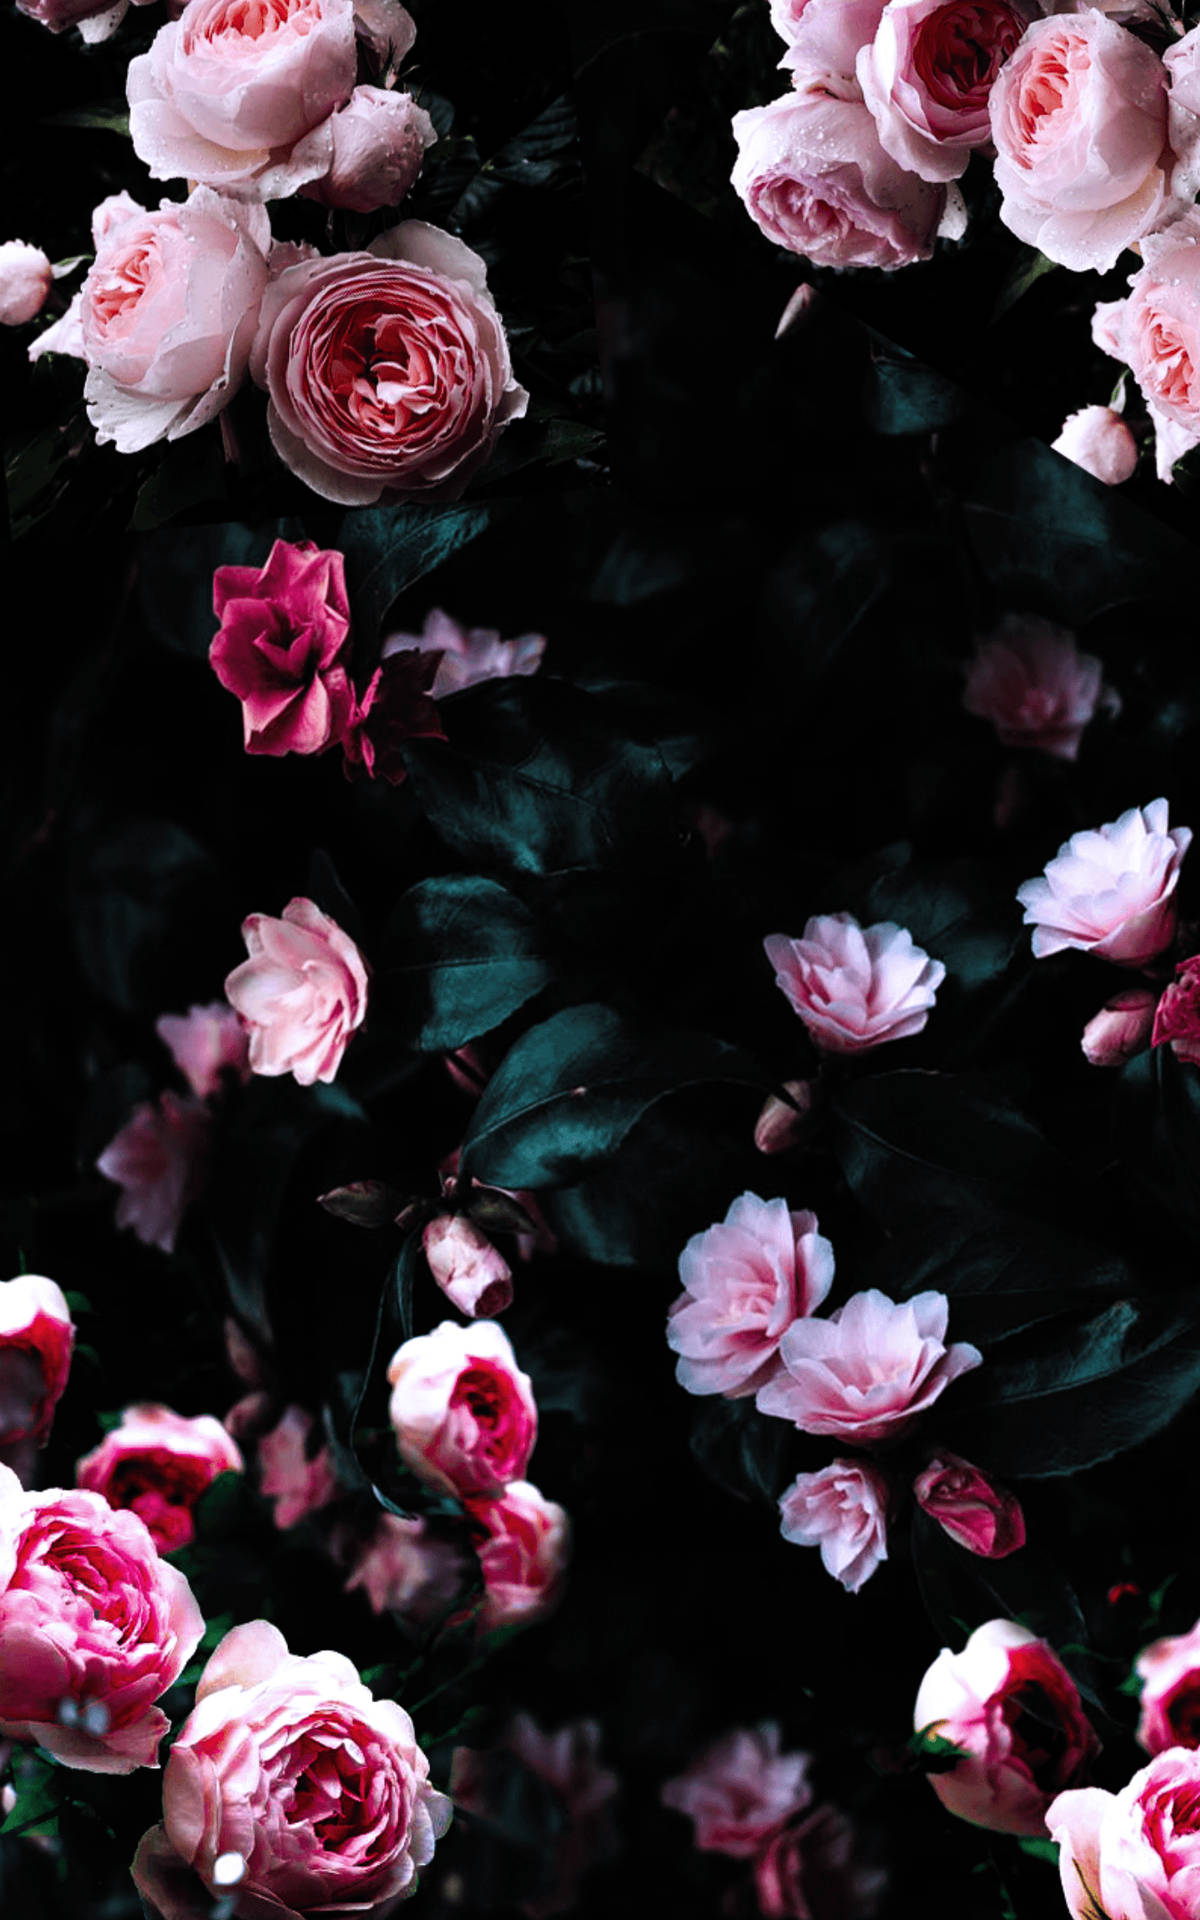 Free Dark Hd Flowers Wallpaper Downloads, [100+] Dark Hd Flowers Wallpapers  for FREE 